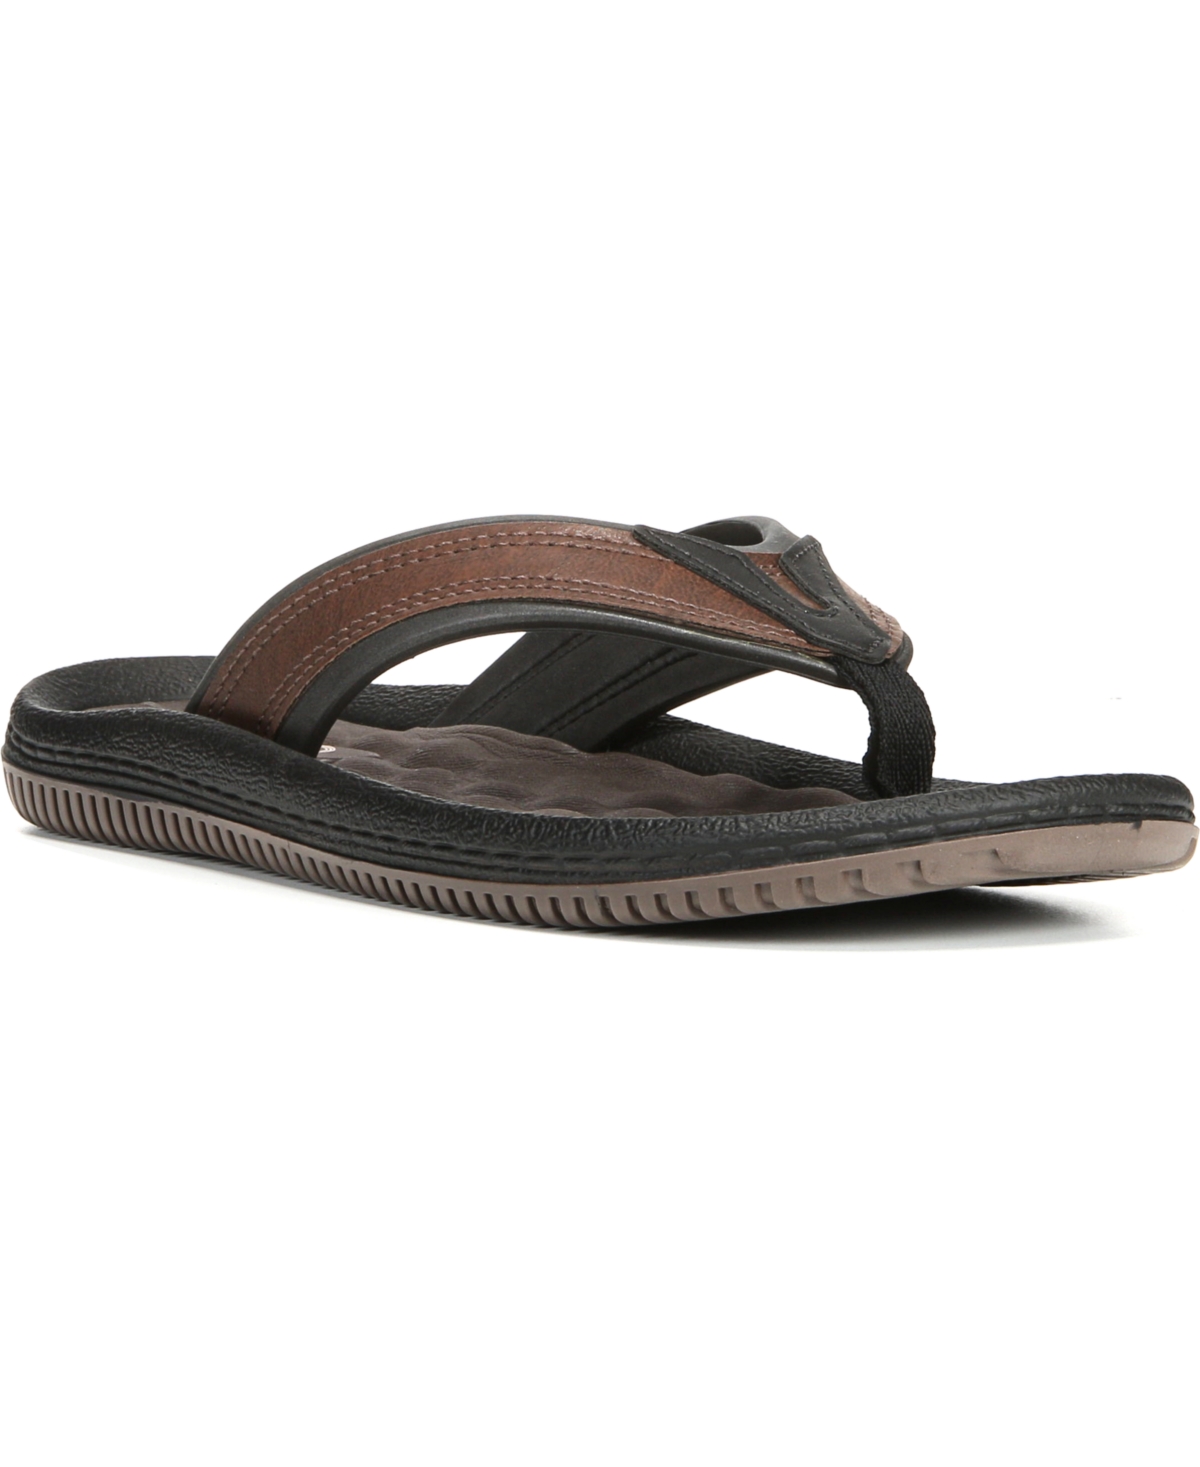 Men's Donnar Thongs Slip-On Sandals - Brown